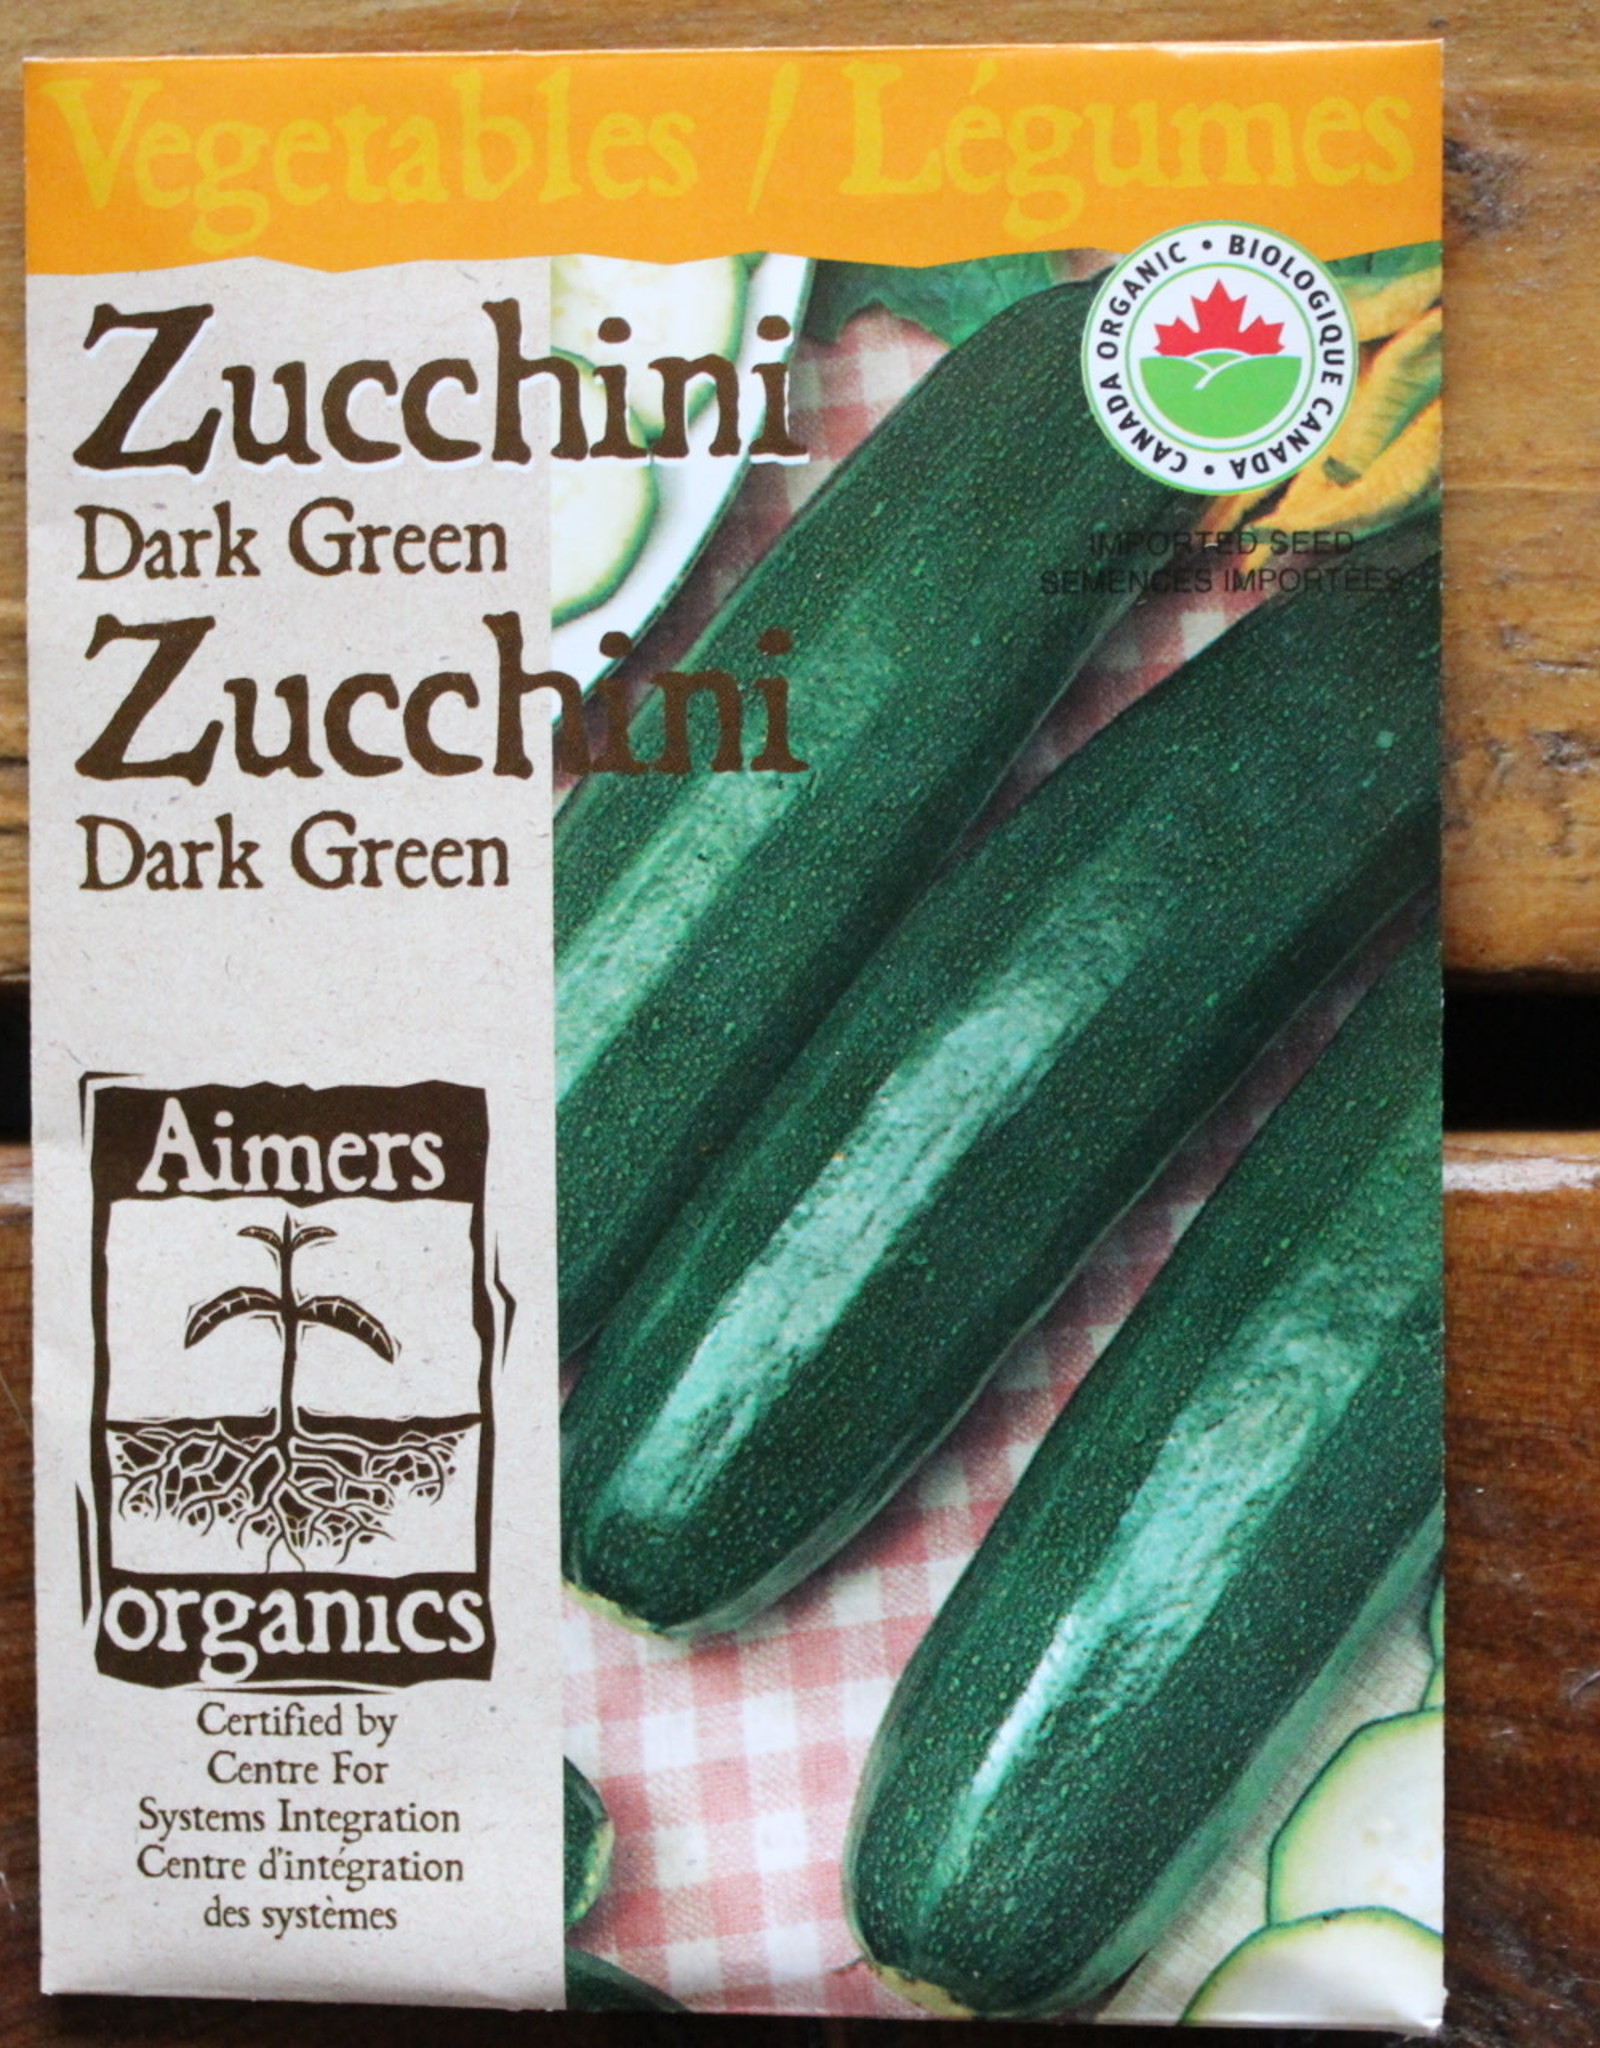 Aimers Squash - Dark Green Zucchini